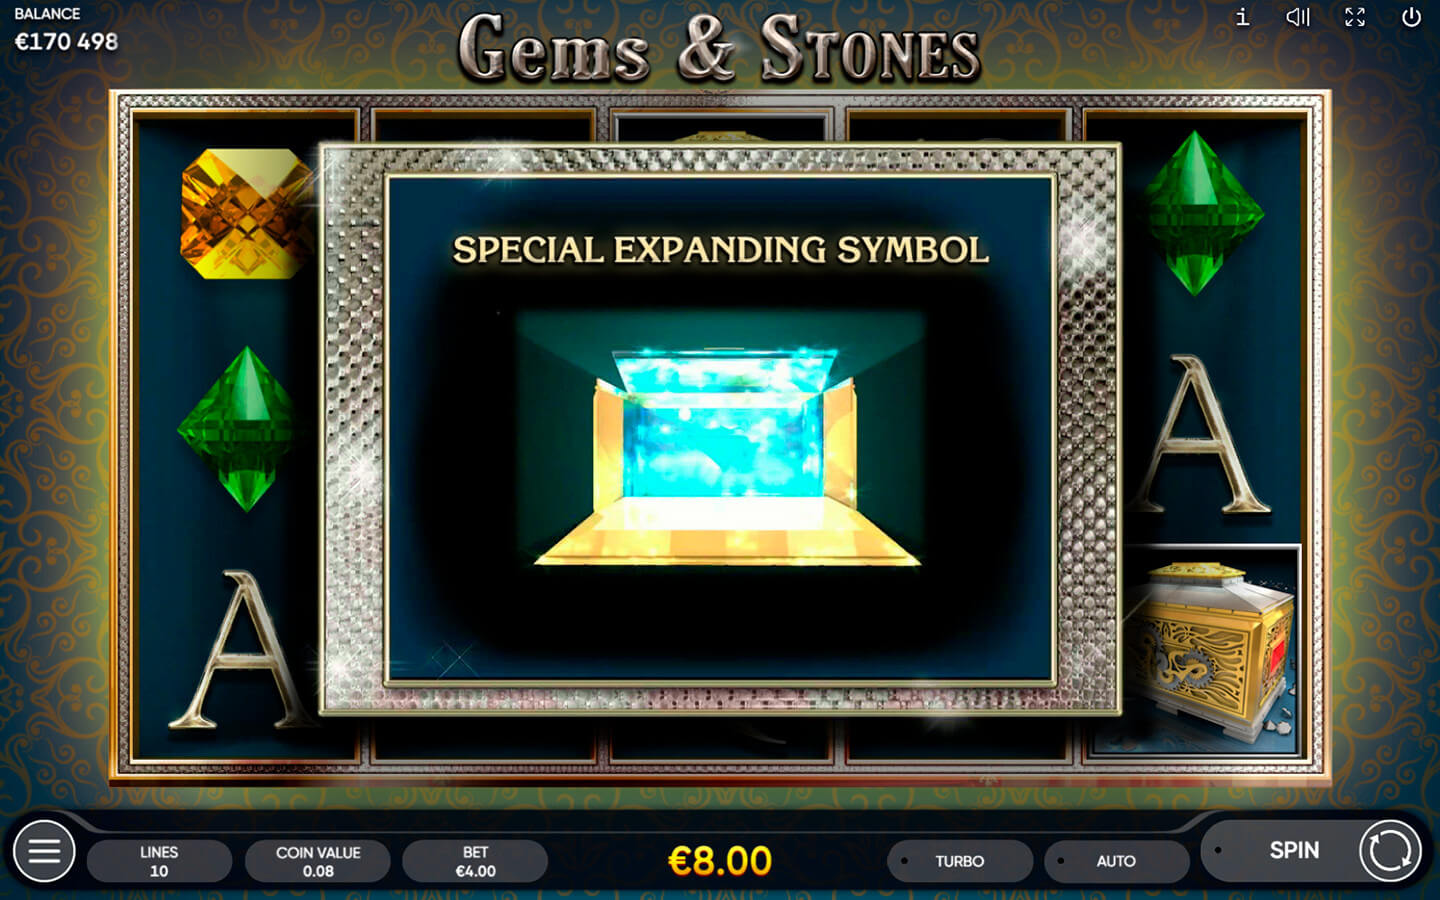 Gems & stones